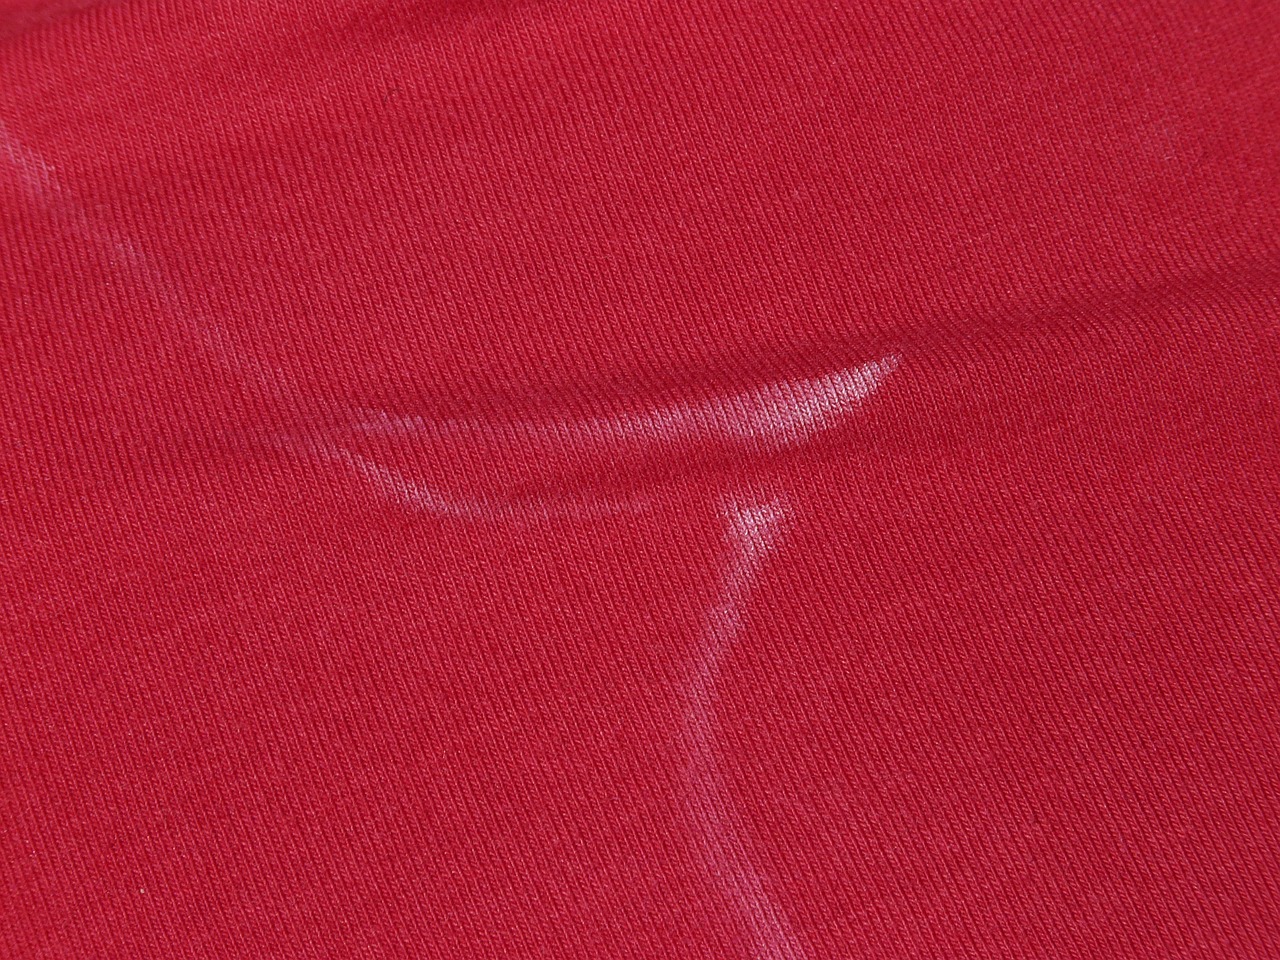 salt margins t shirt sweating free photo